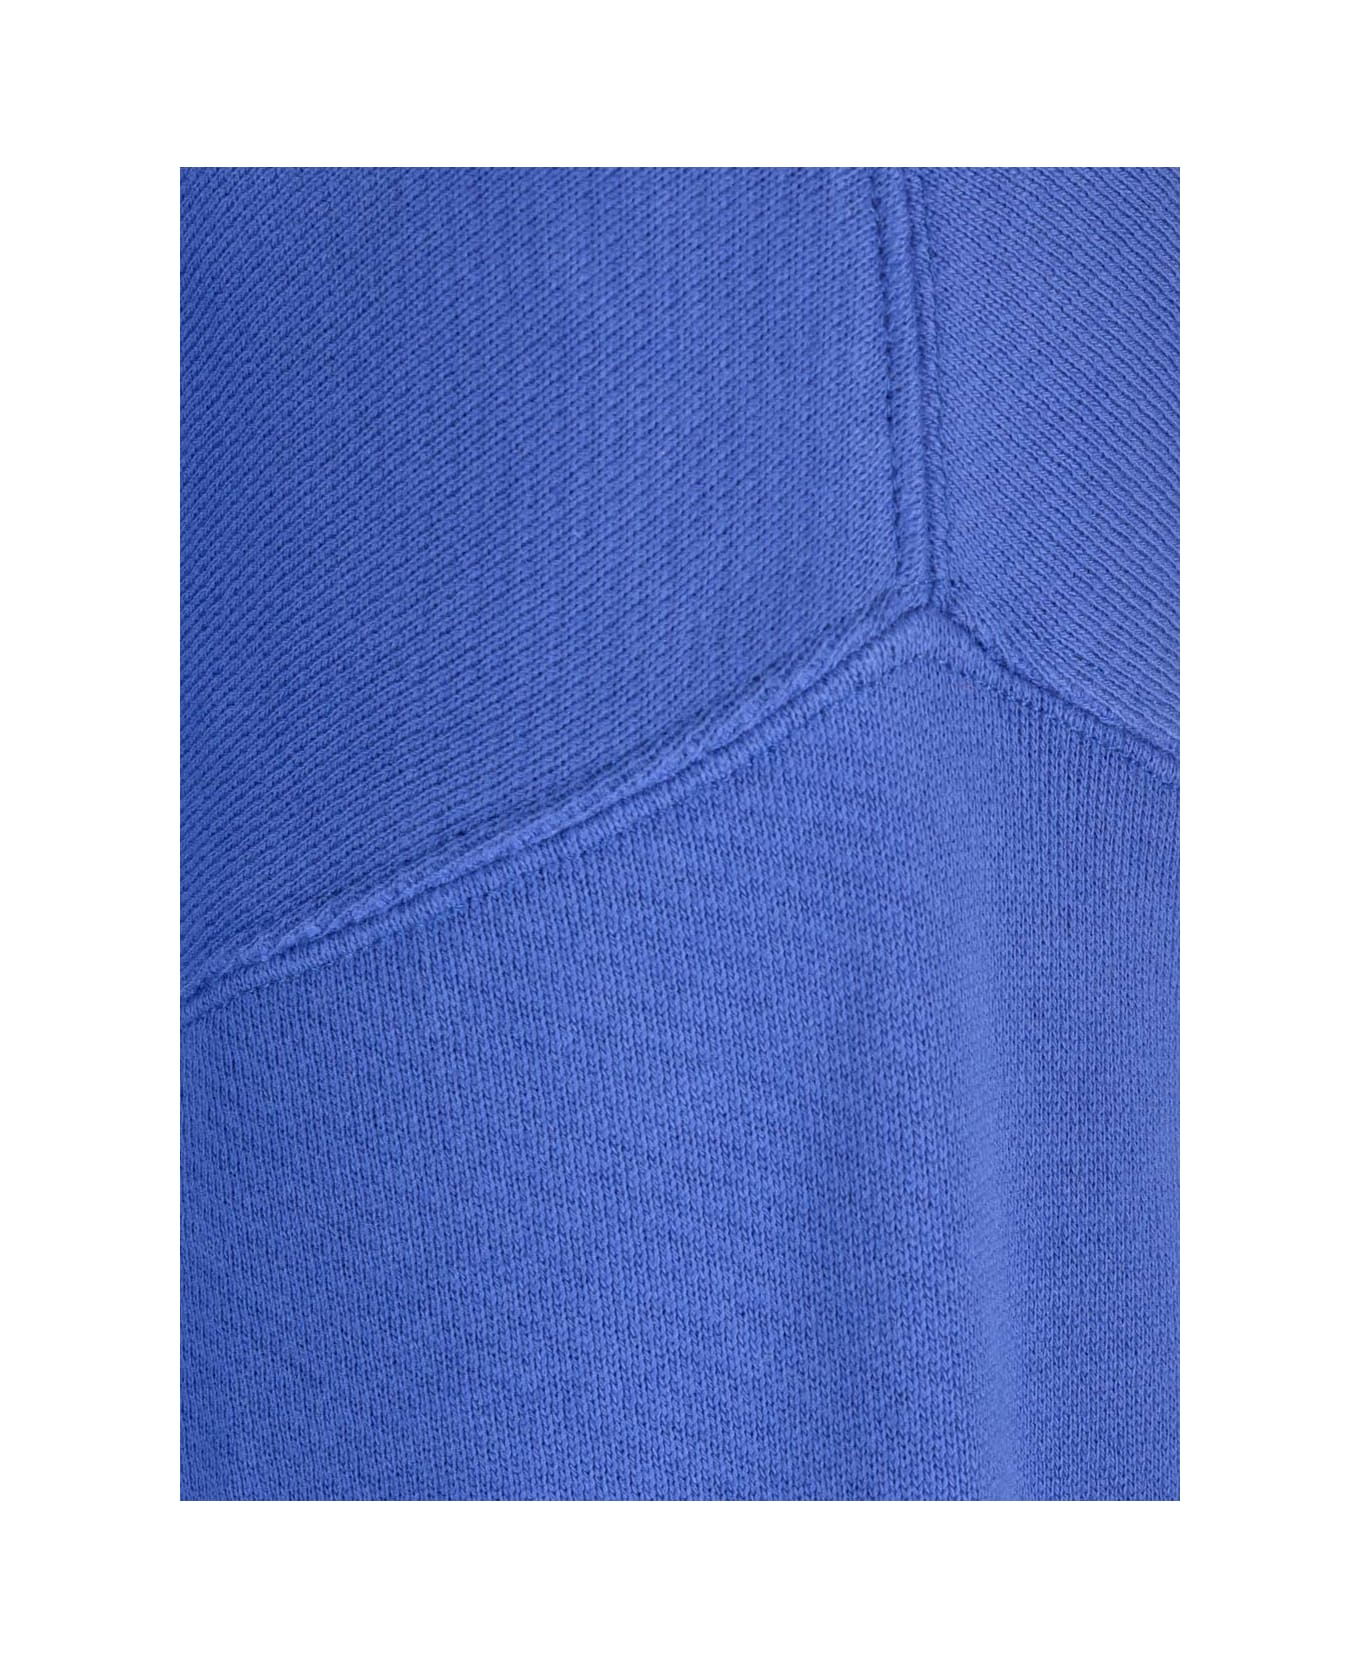 Off-White "off" Sweatshirt - Blue